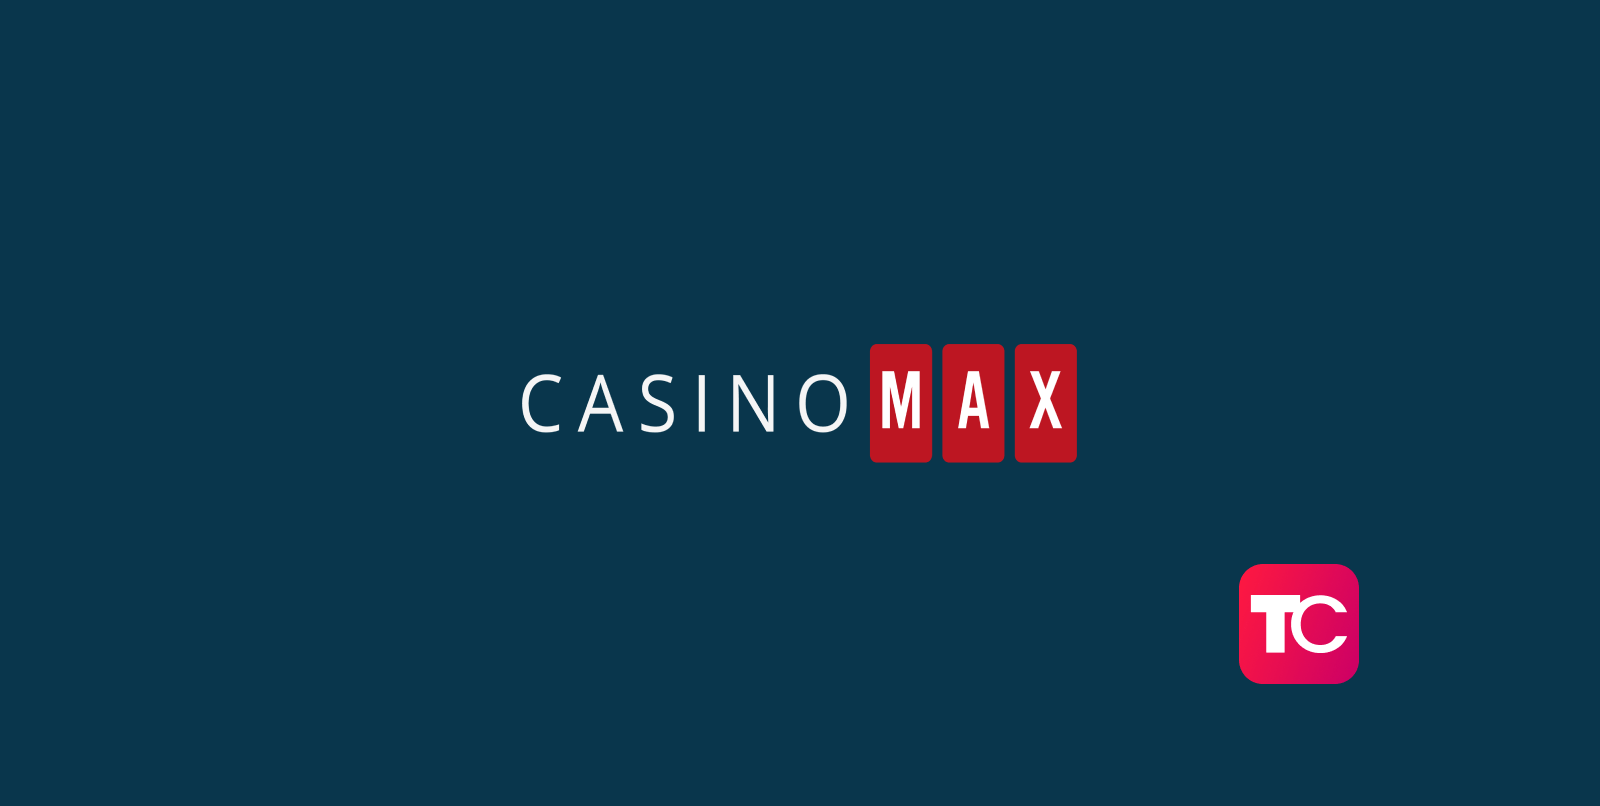 casinomax welcome bonus casino review topcasinos